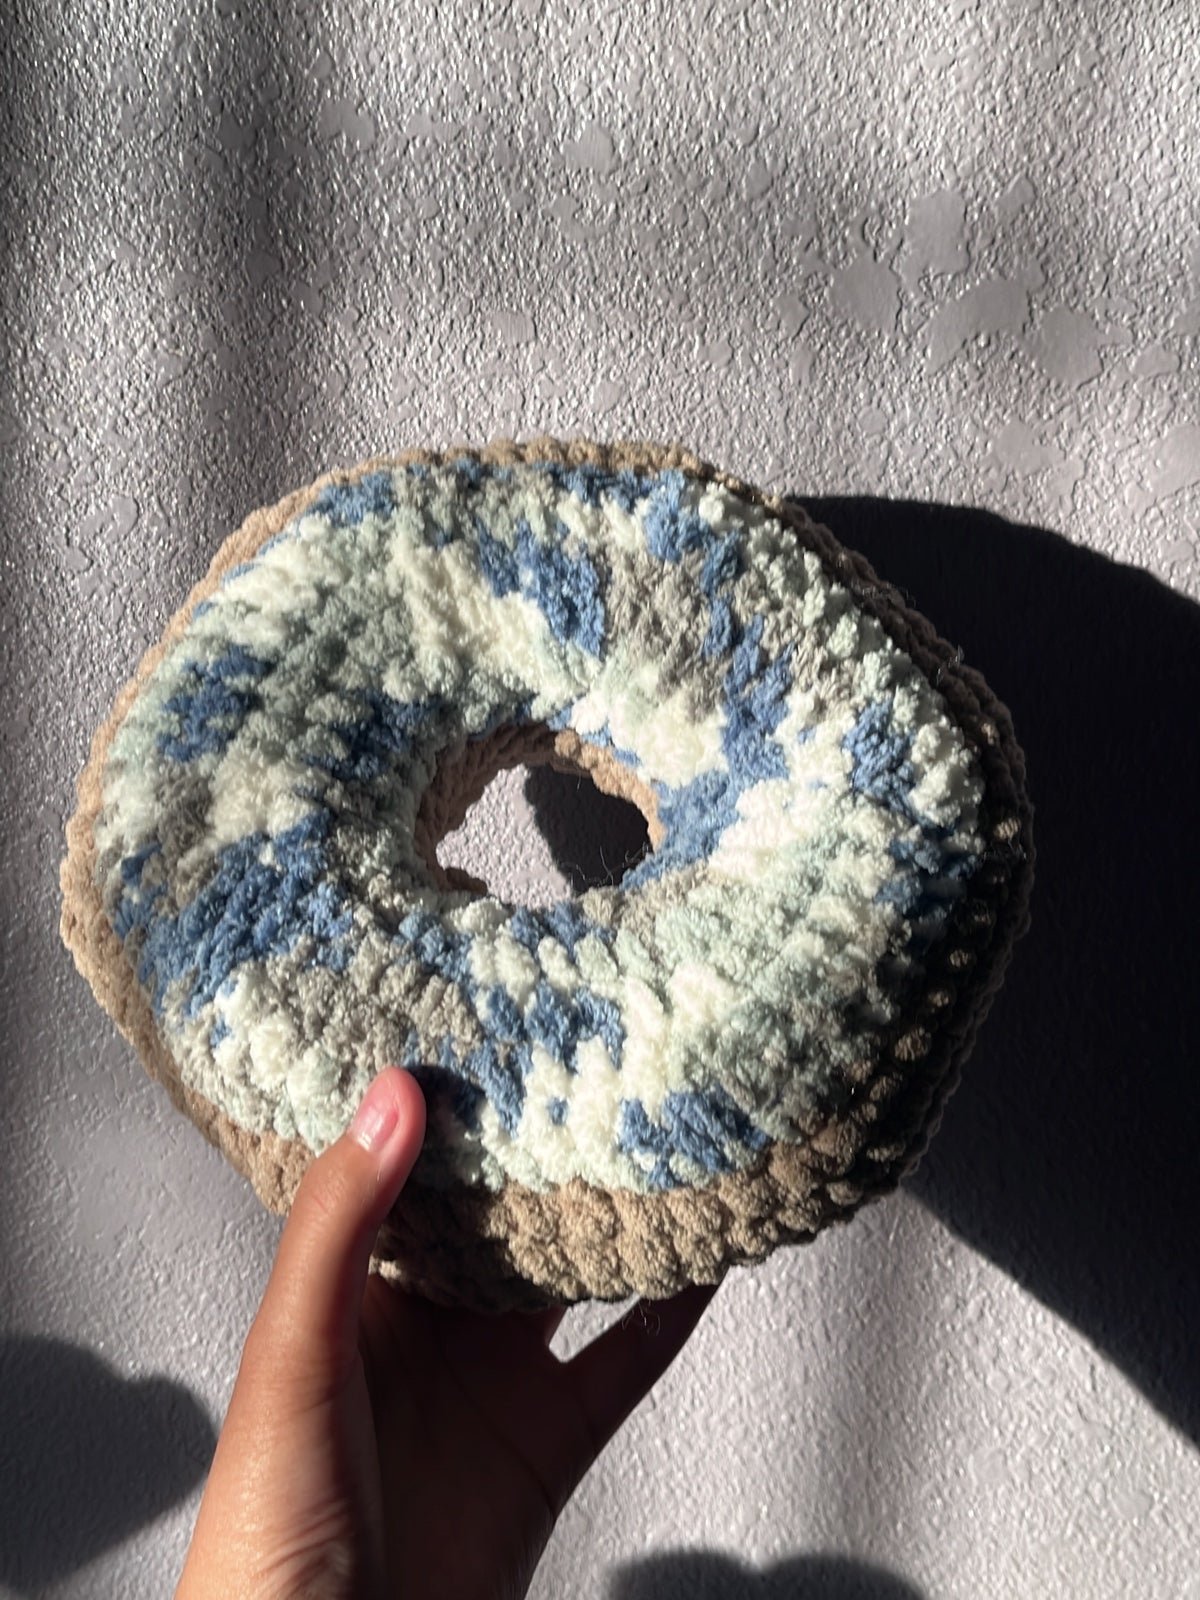 Crochet donut GHBrRwWFa